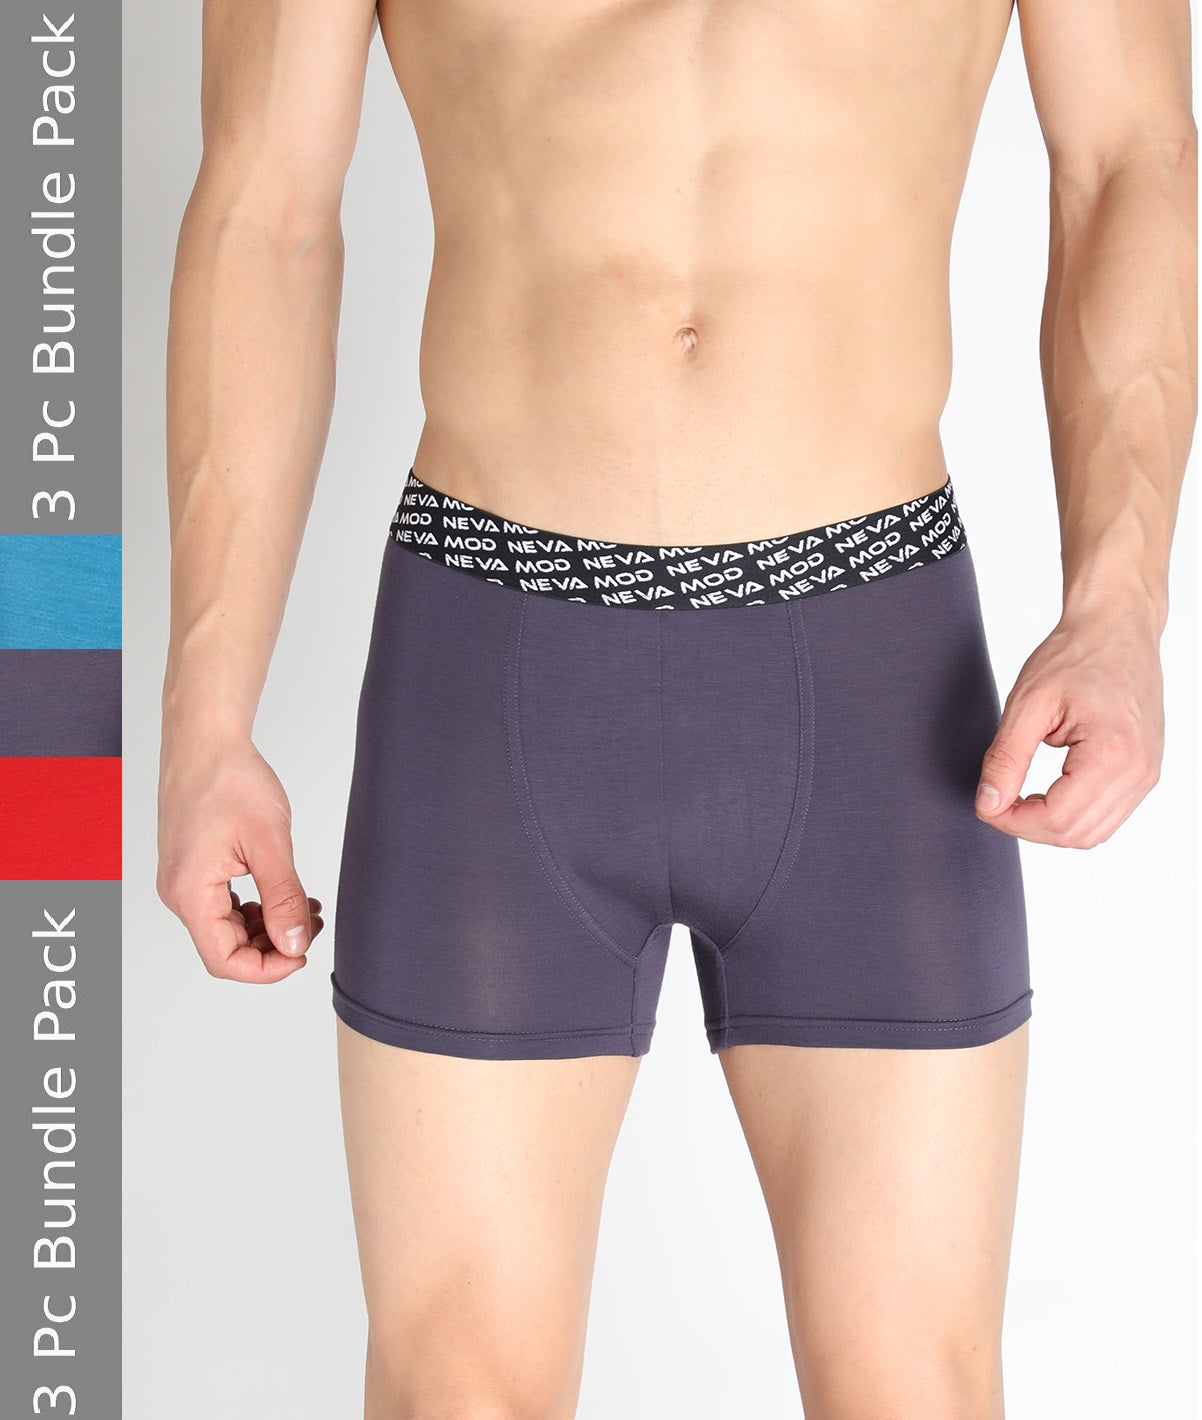 Neva Solid Short trunk underwear for men